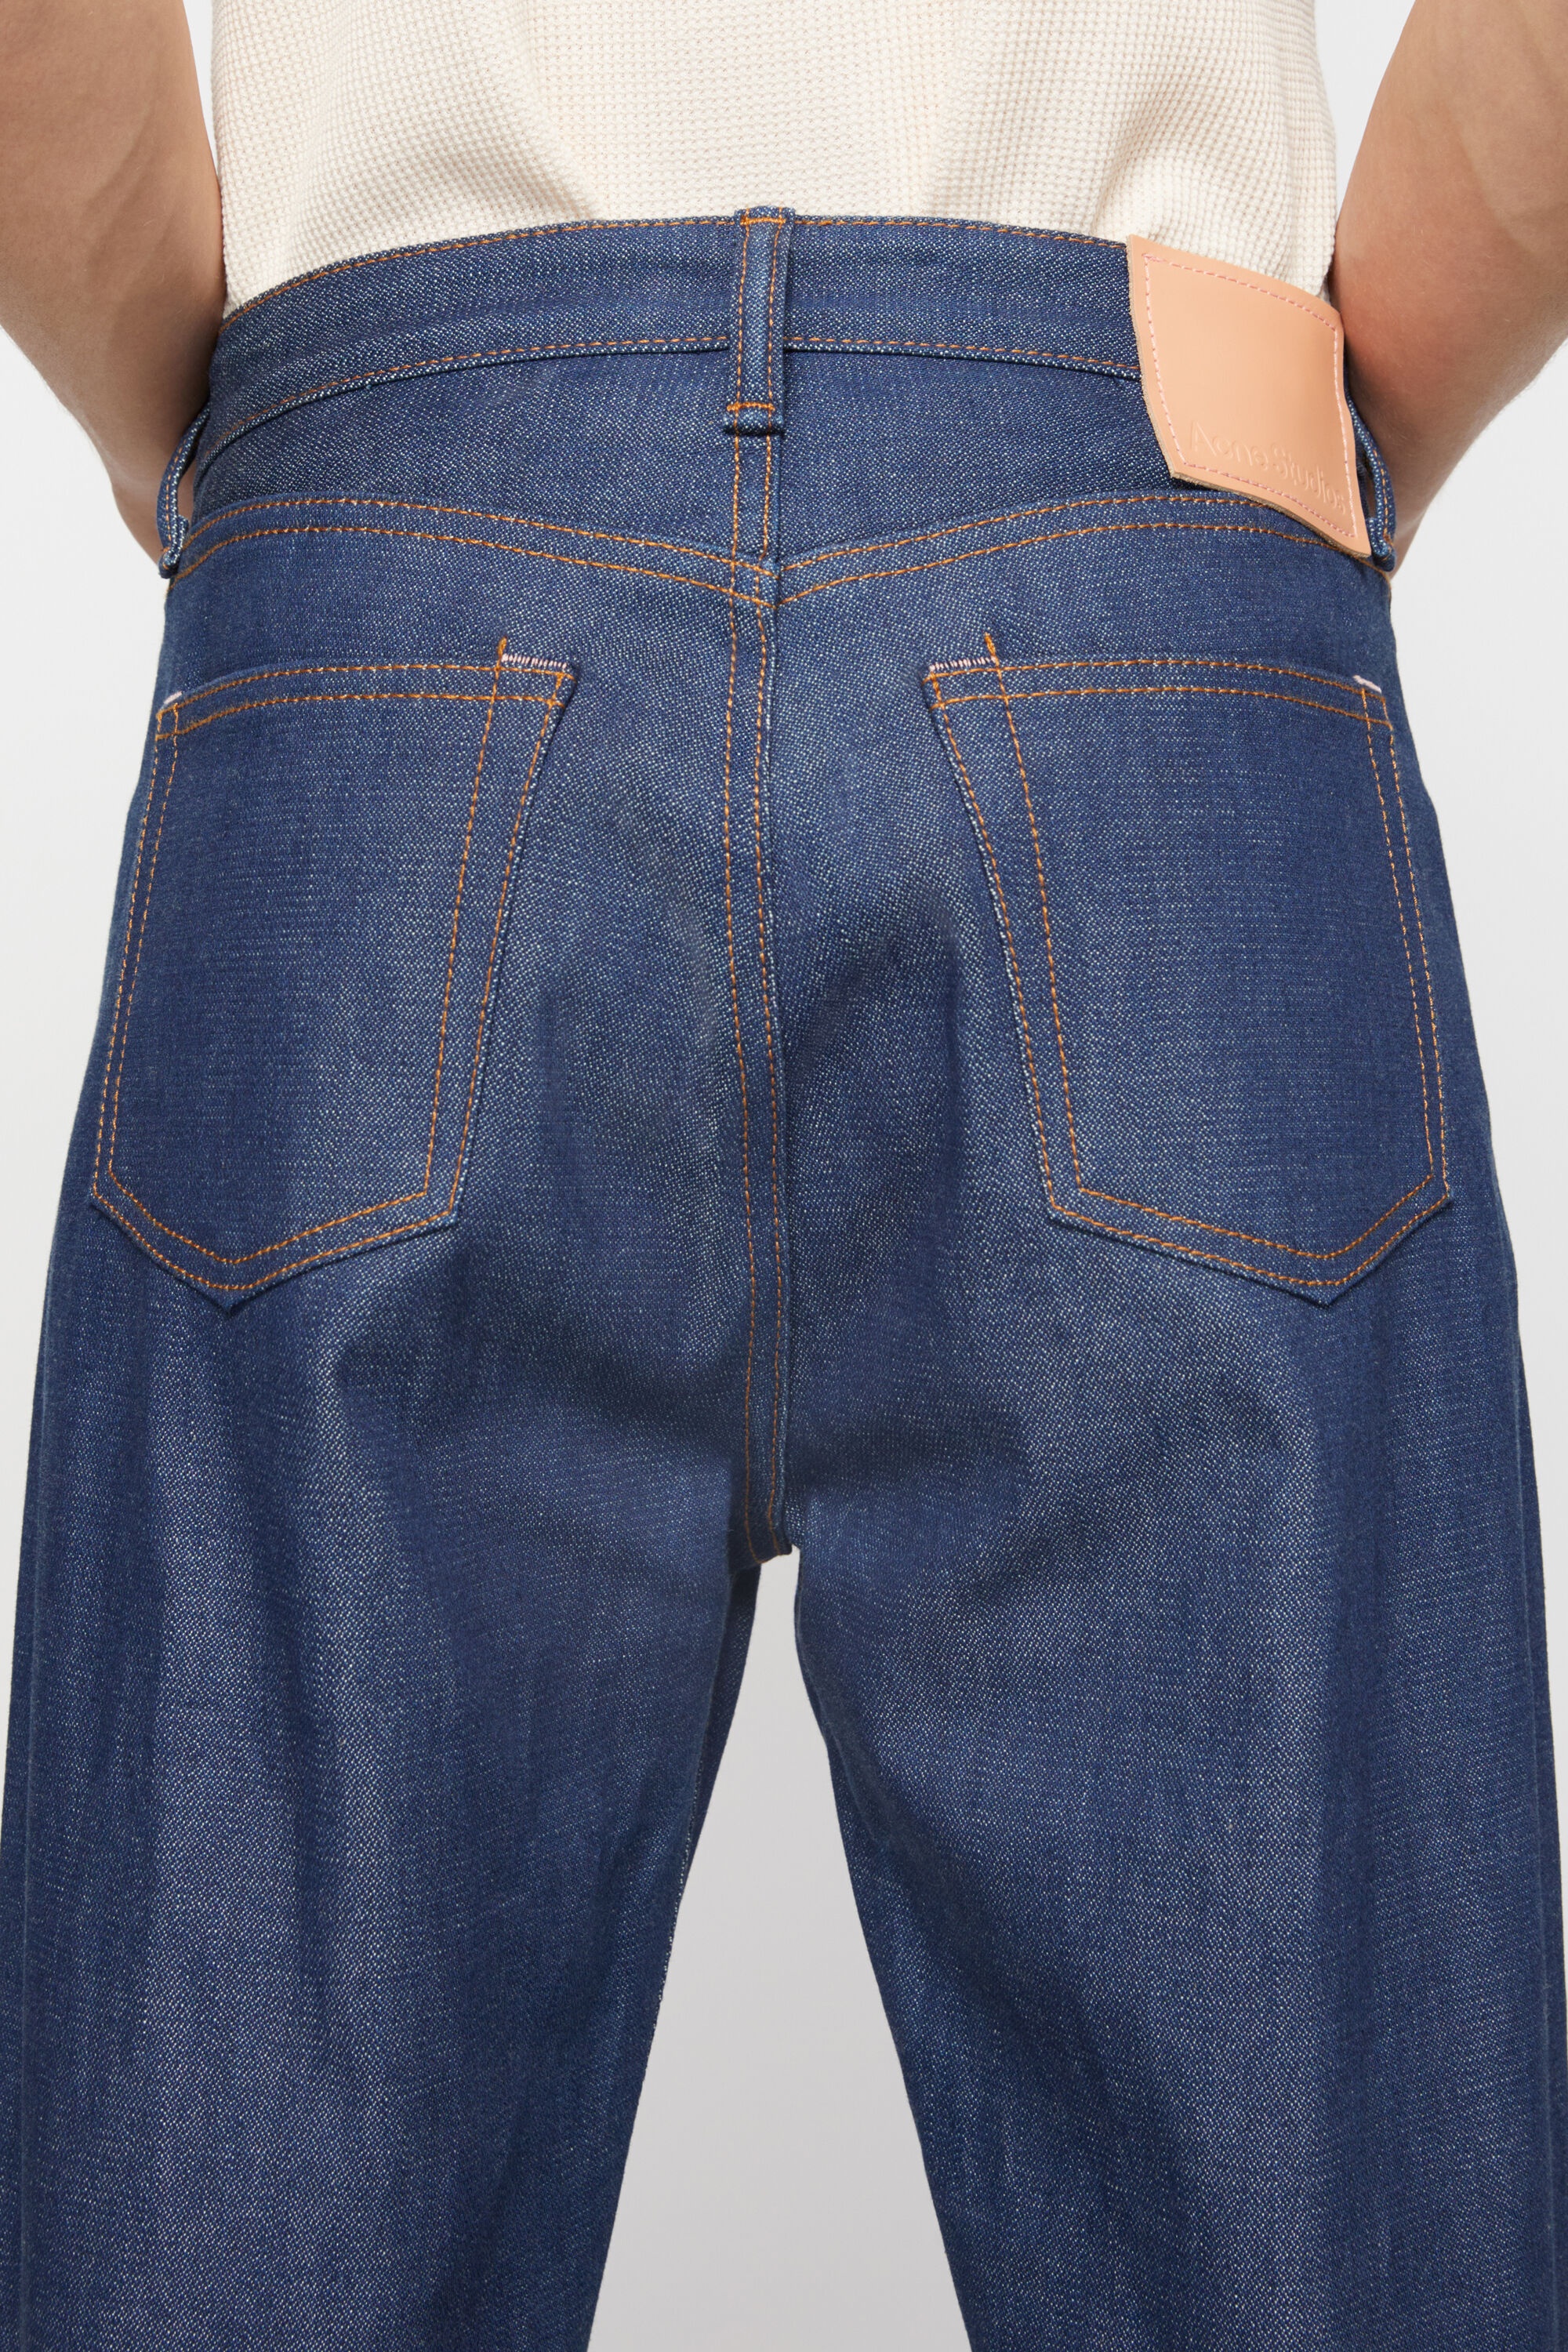 Regular fit jeans -1996 - Indigo blue - 6